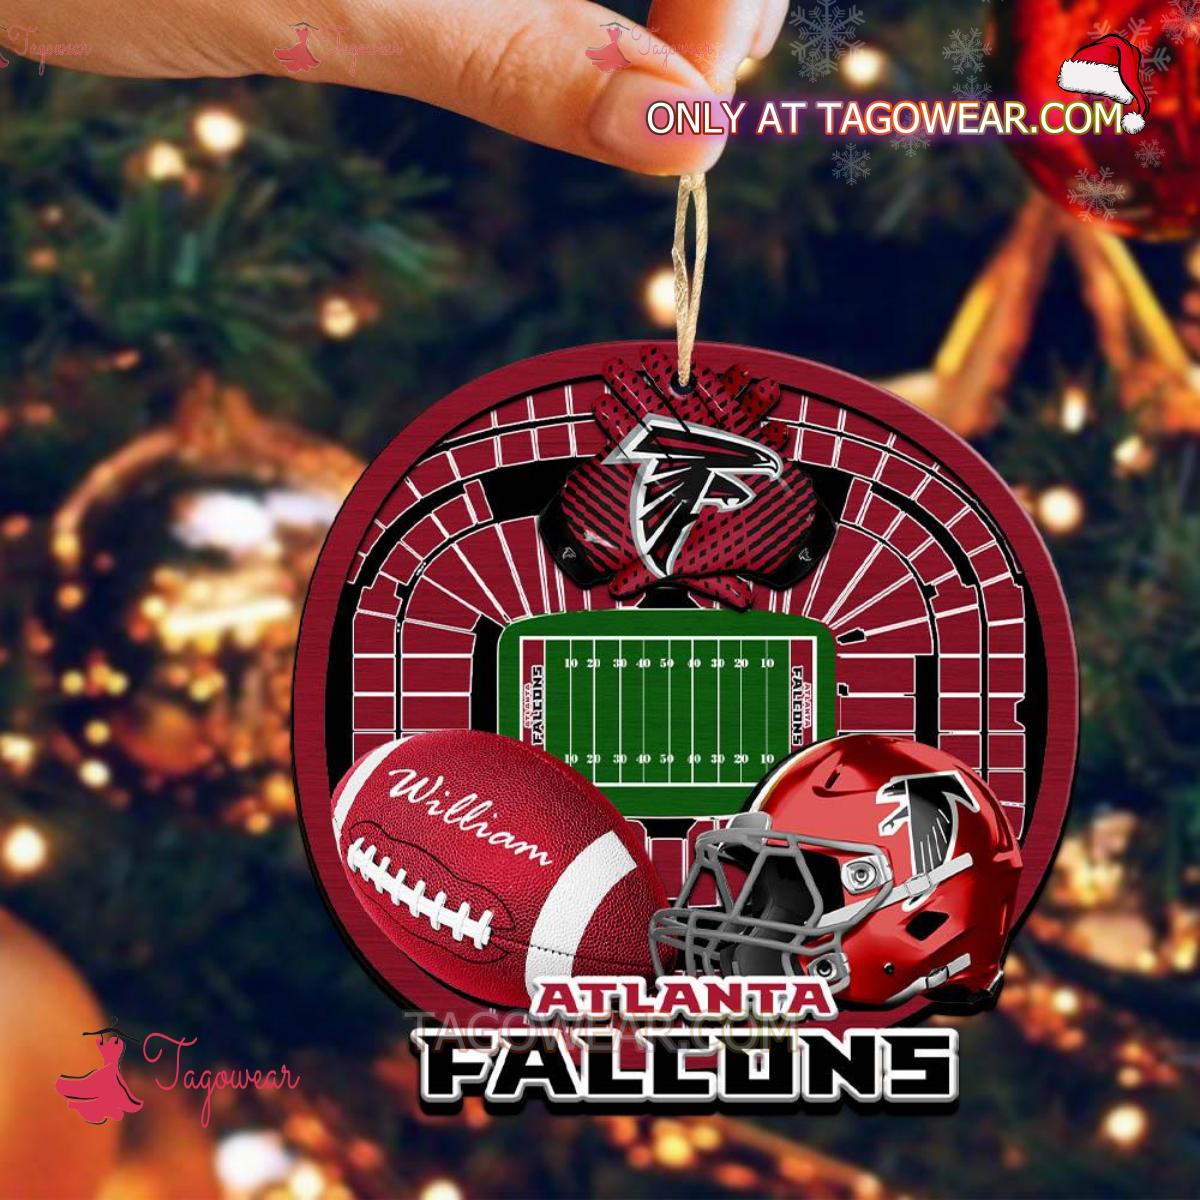 Atlanta Falcons NFL Stadium Personalized Ornament a